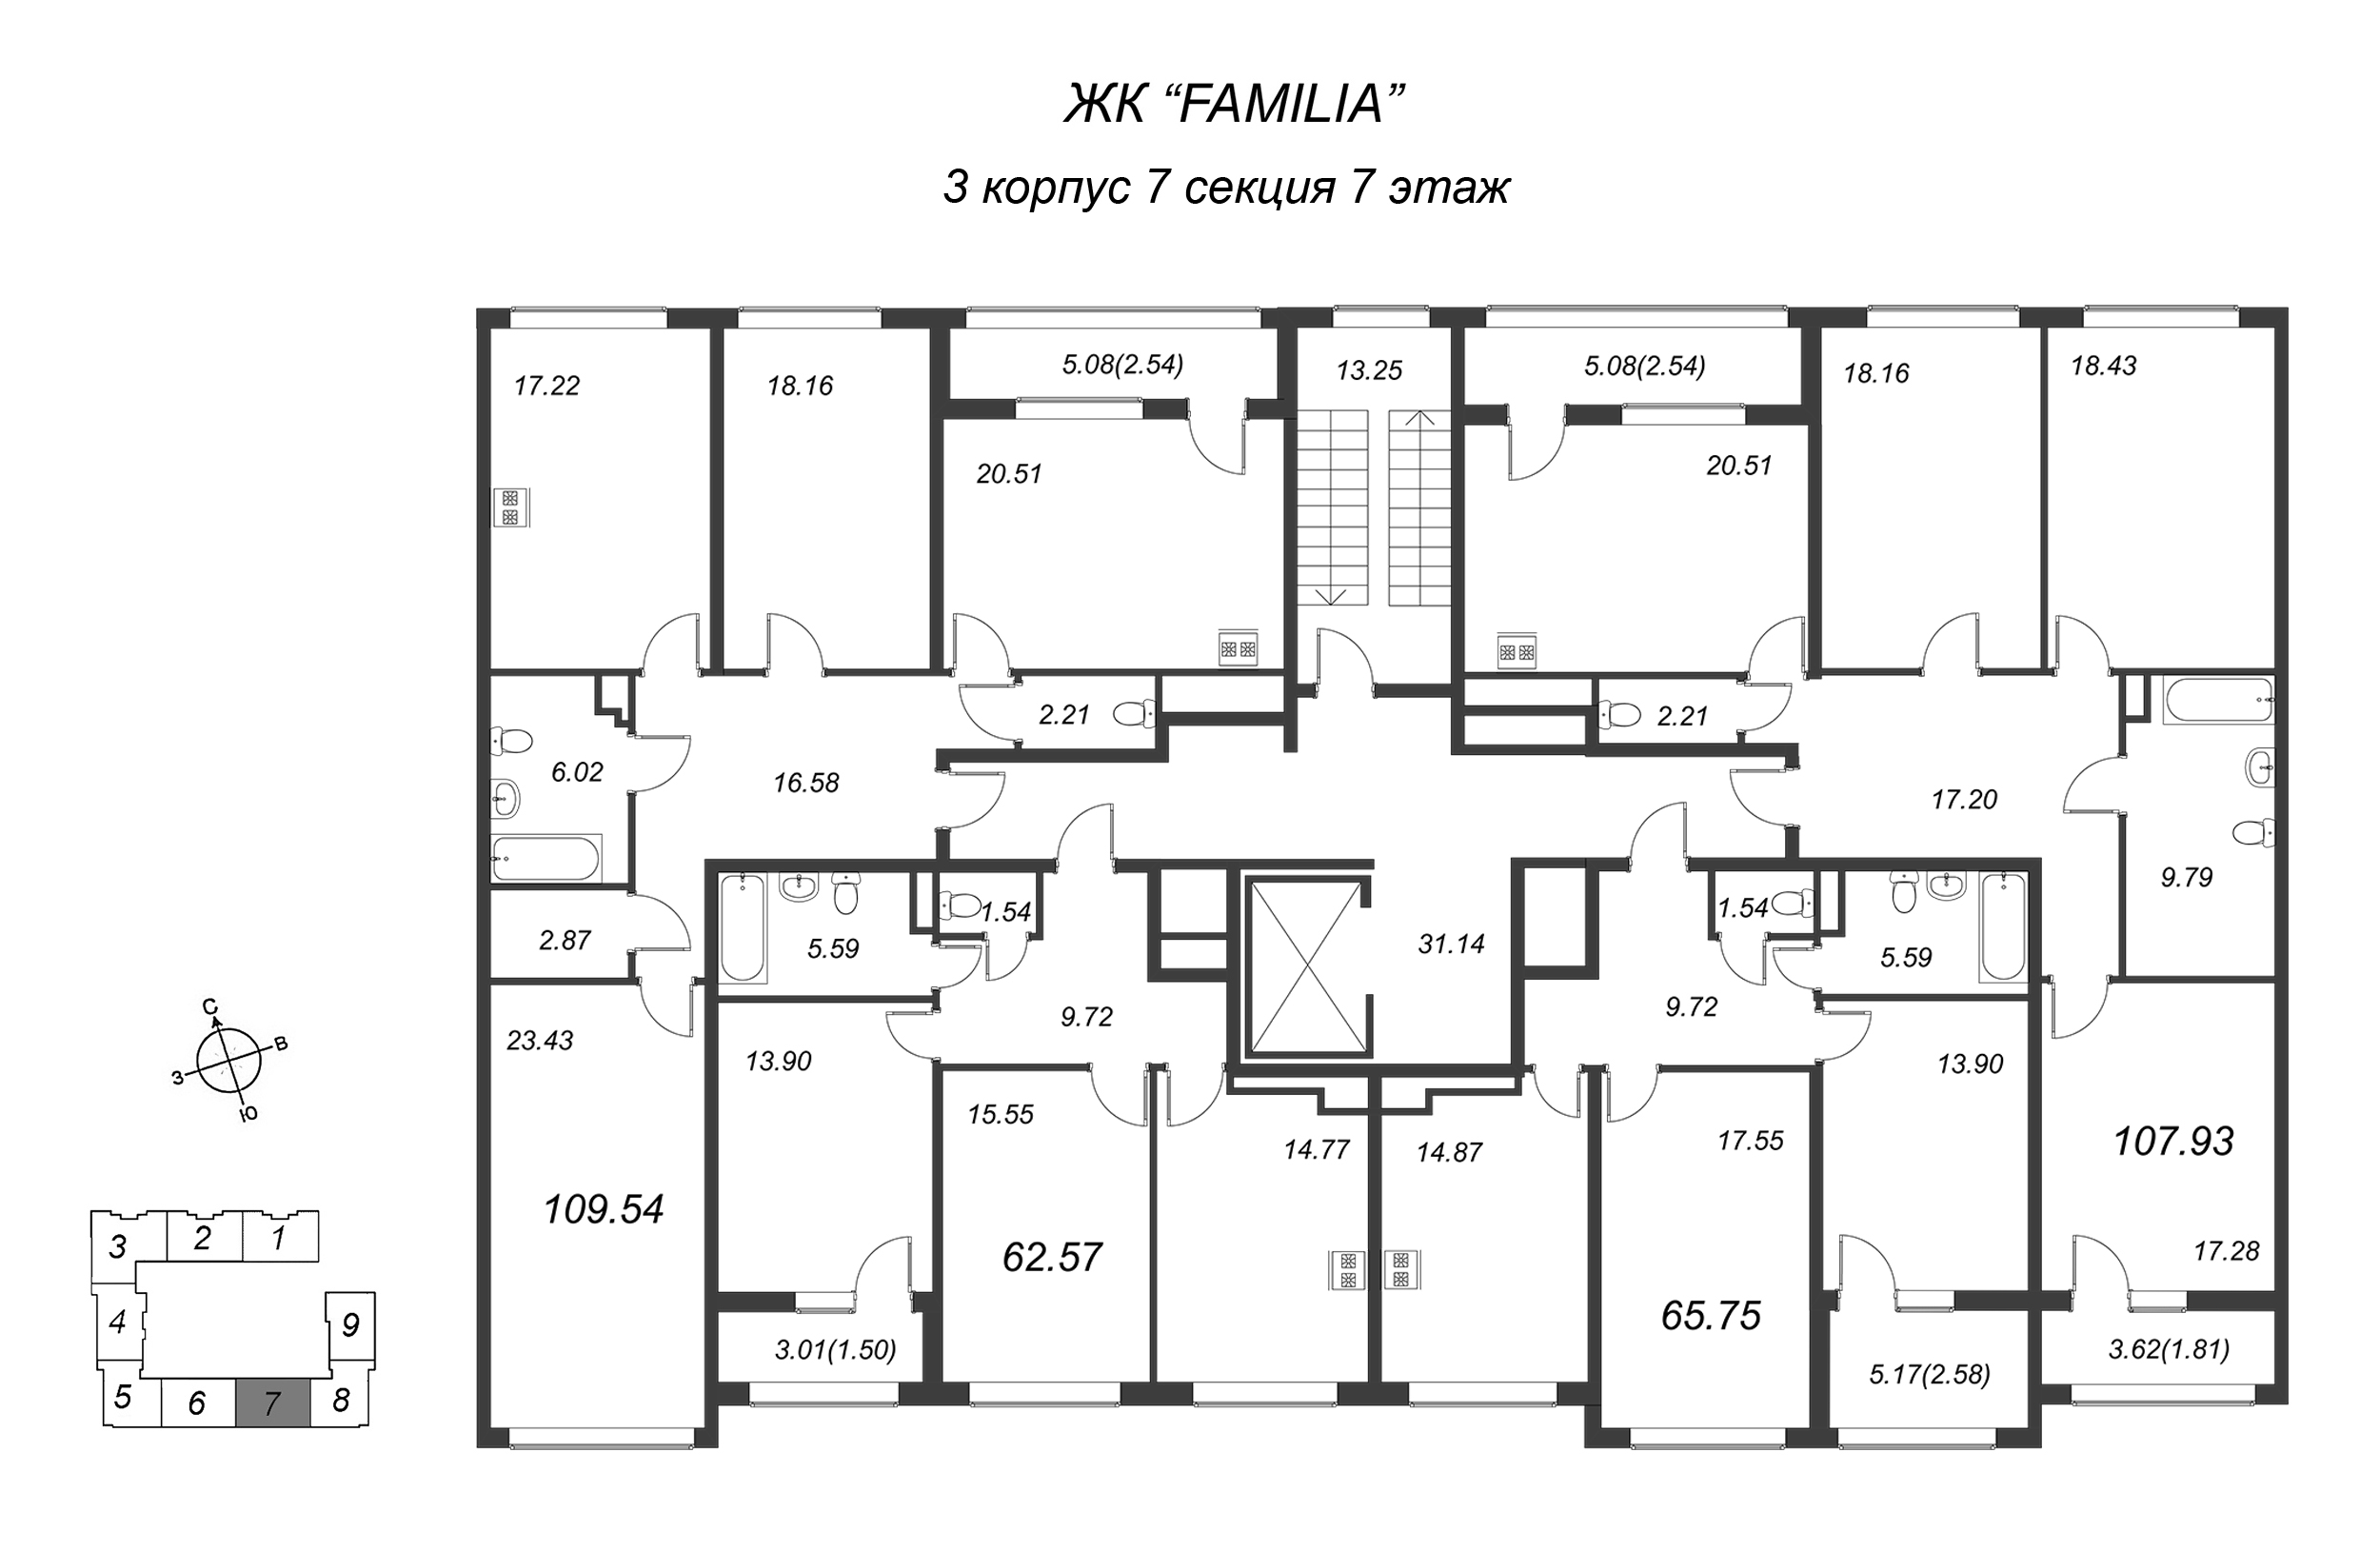 4-комнатная (Евро) квартира, 108.3 м² в ЖК "FAMILIA" - планировка этажа